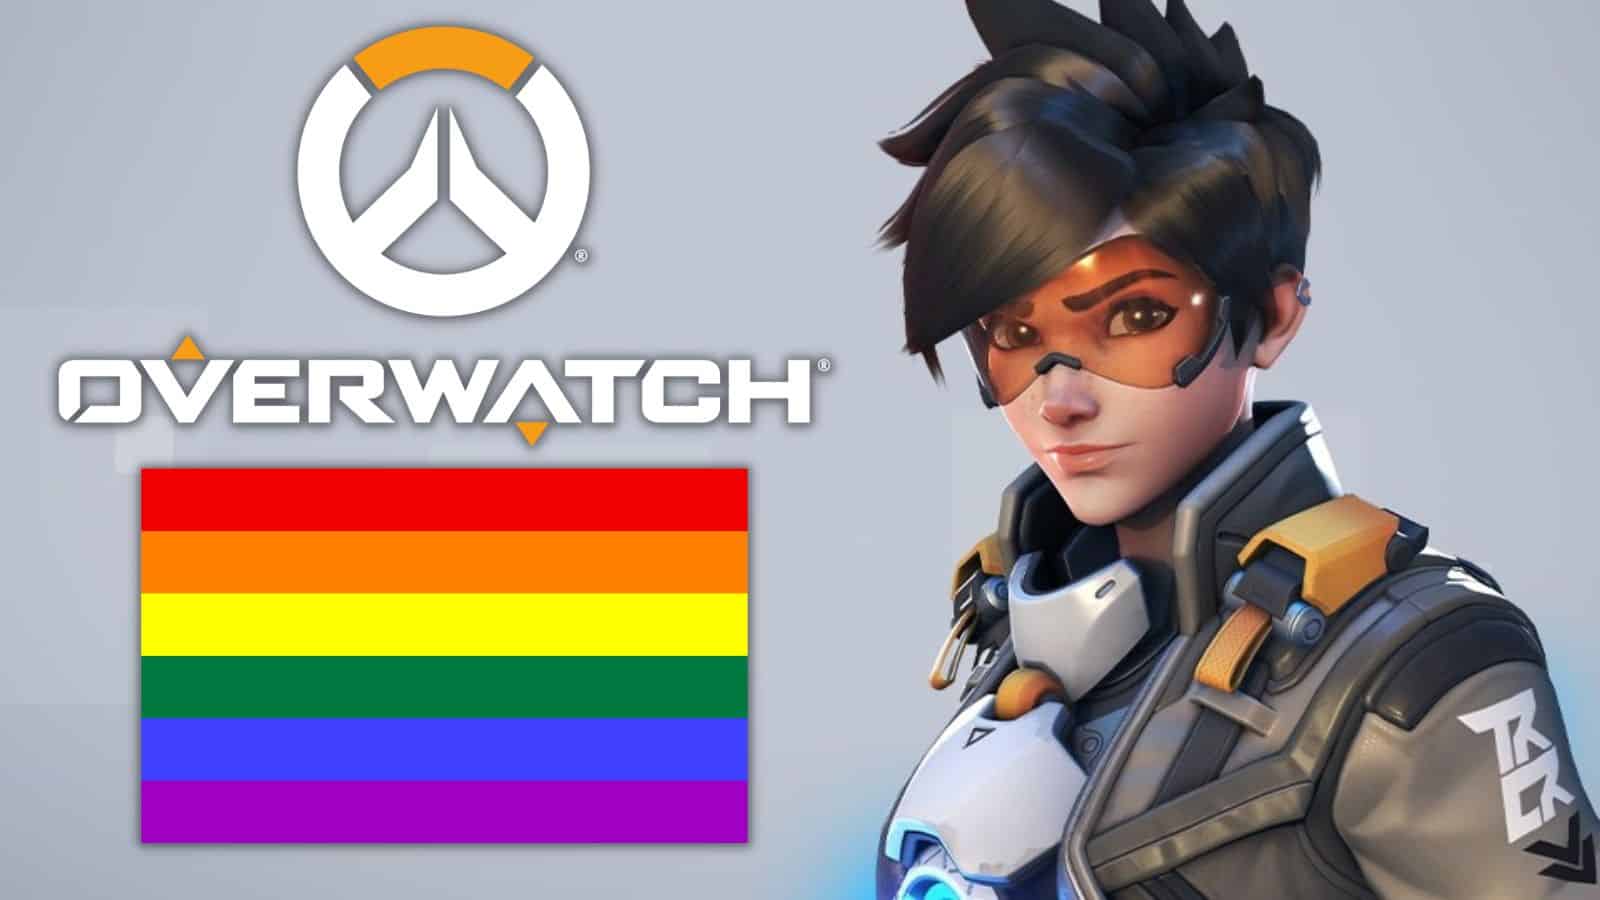 Overwatch com personagem LGBT - Record Gaming - Jornal Record